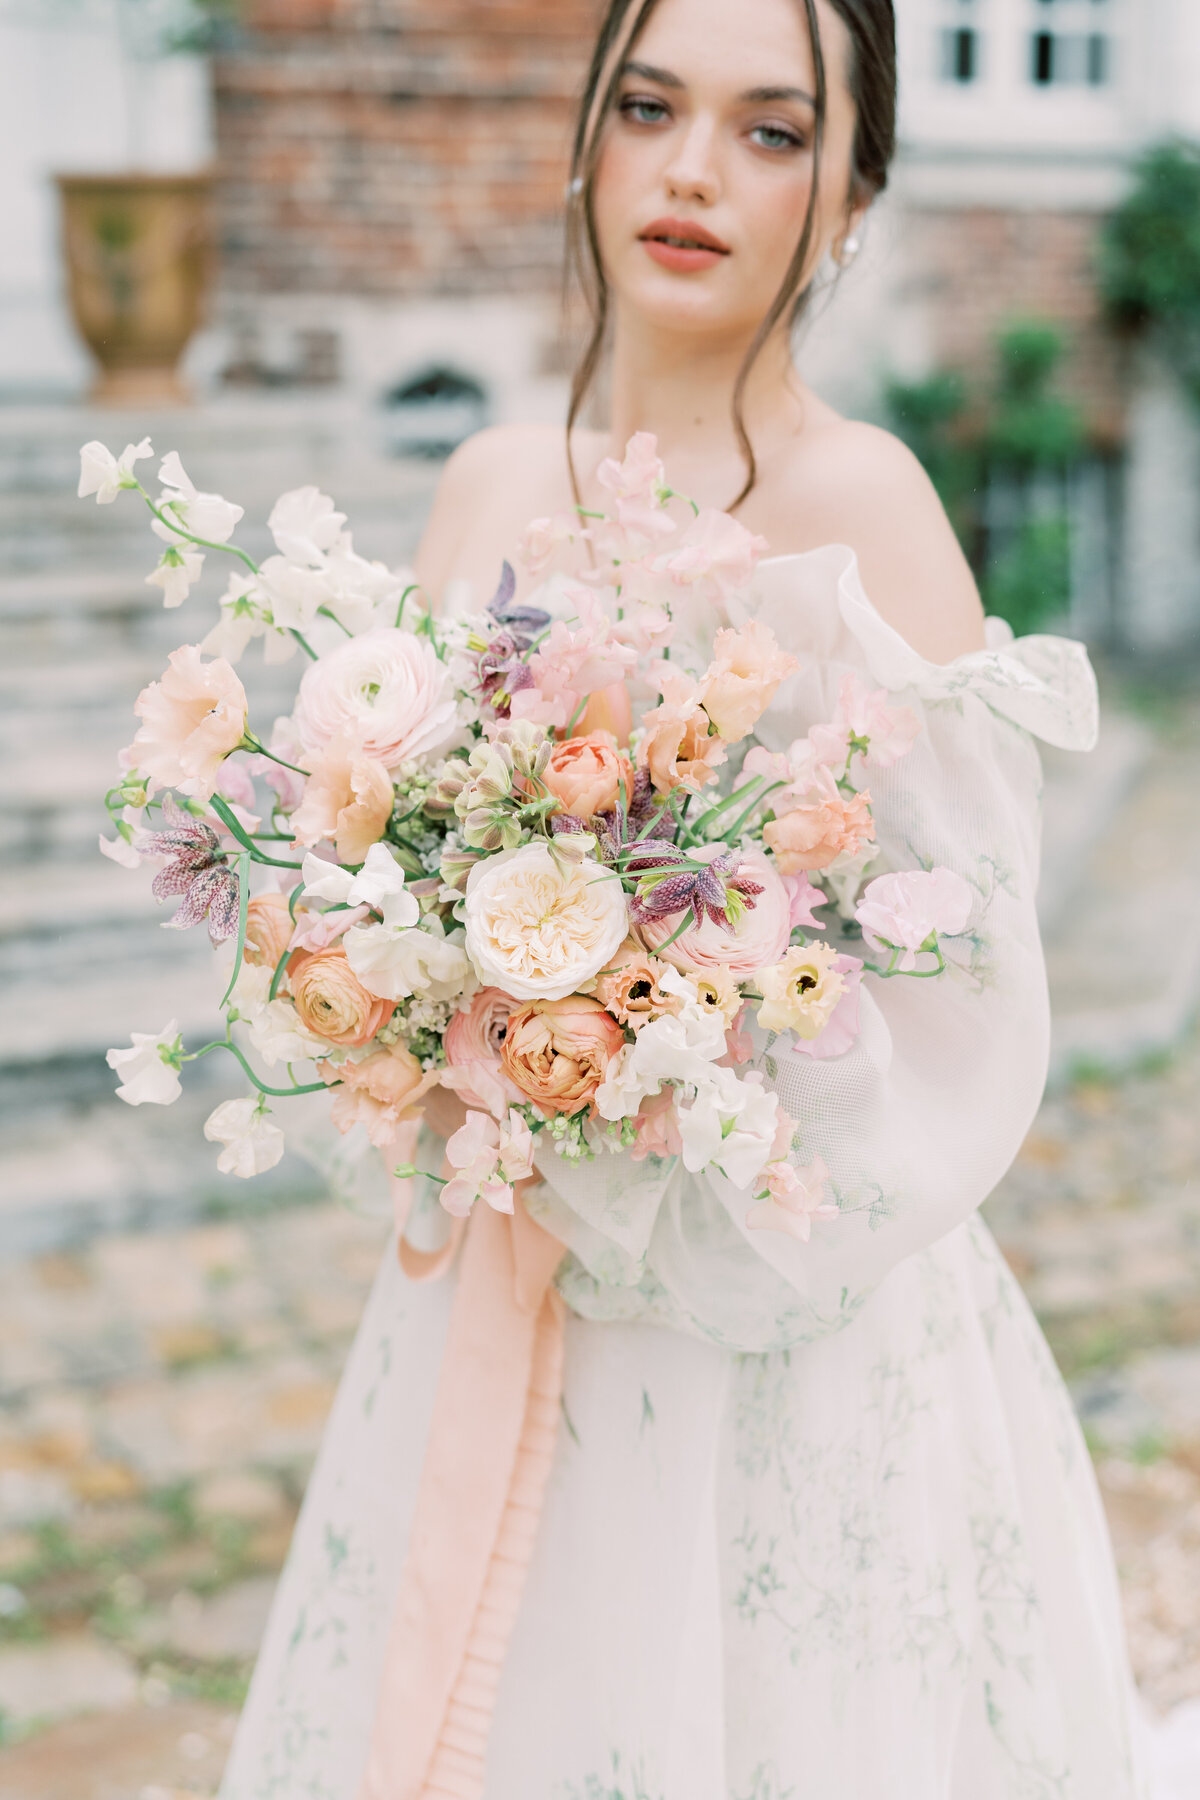 Sarah Rae Floral Designs Wedding Event Florist Flowers Kentucky Chic Whimsical Romantic Weddings74